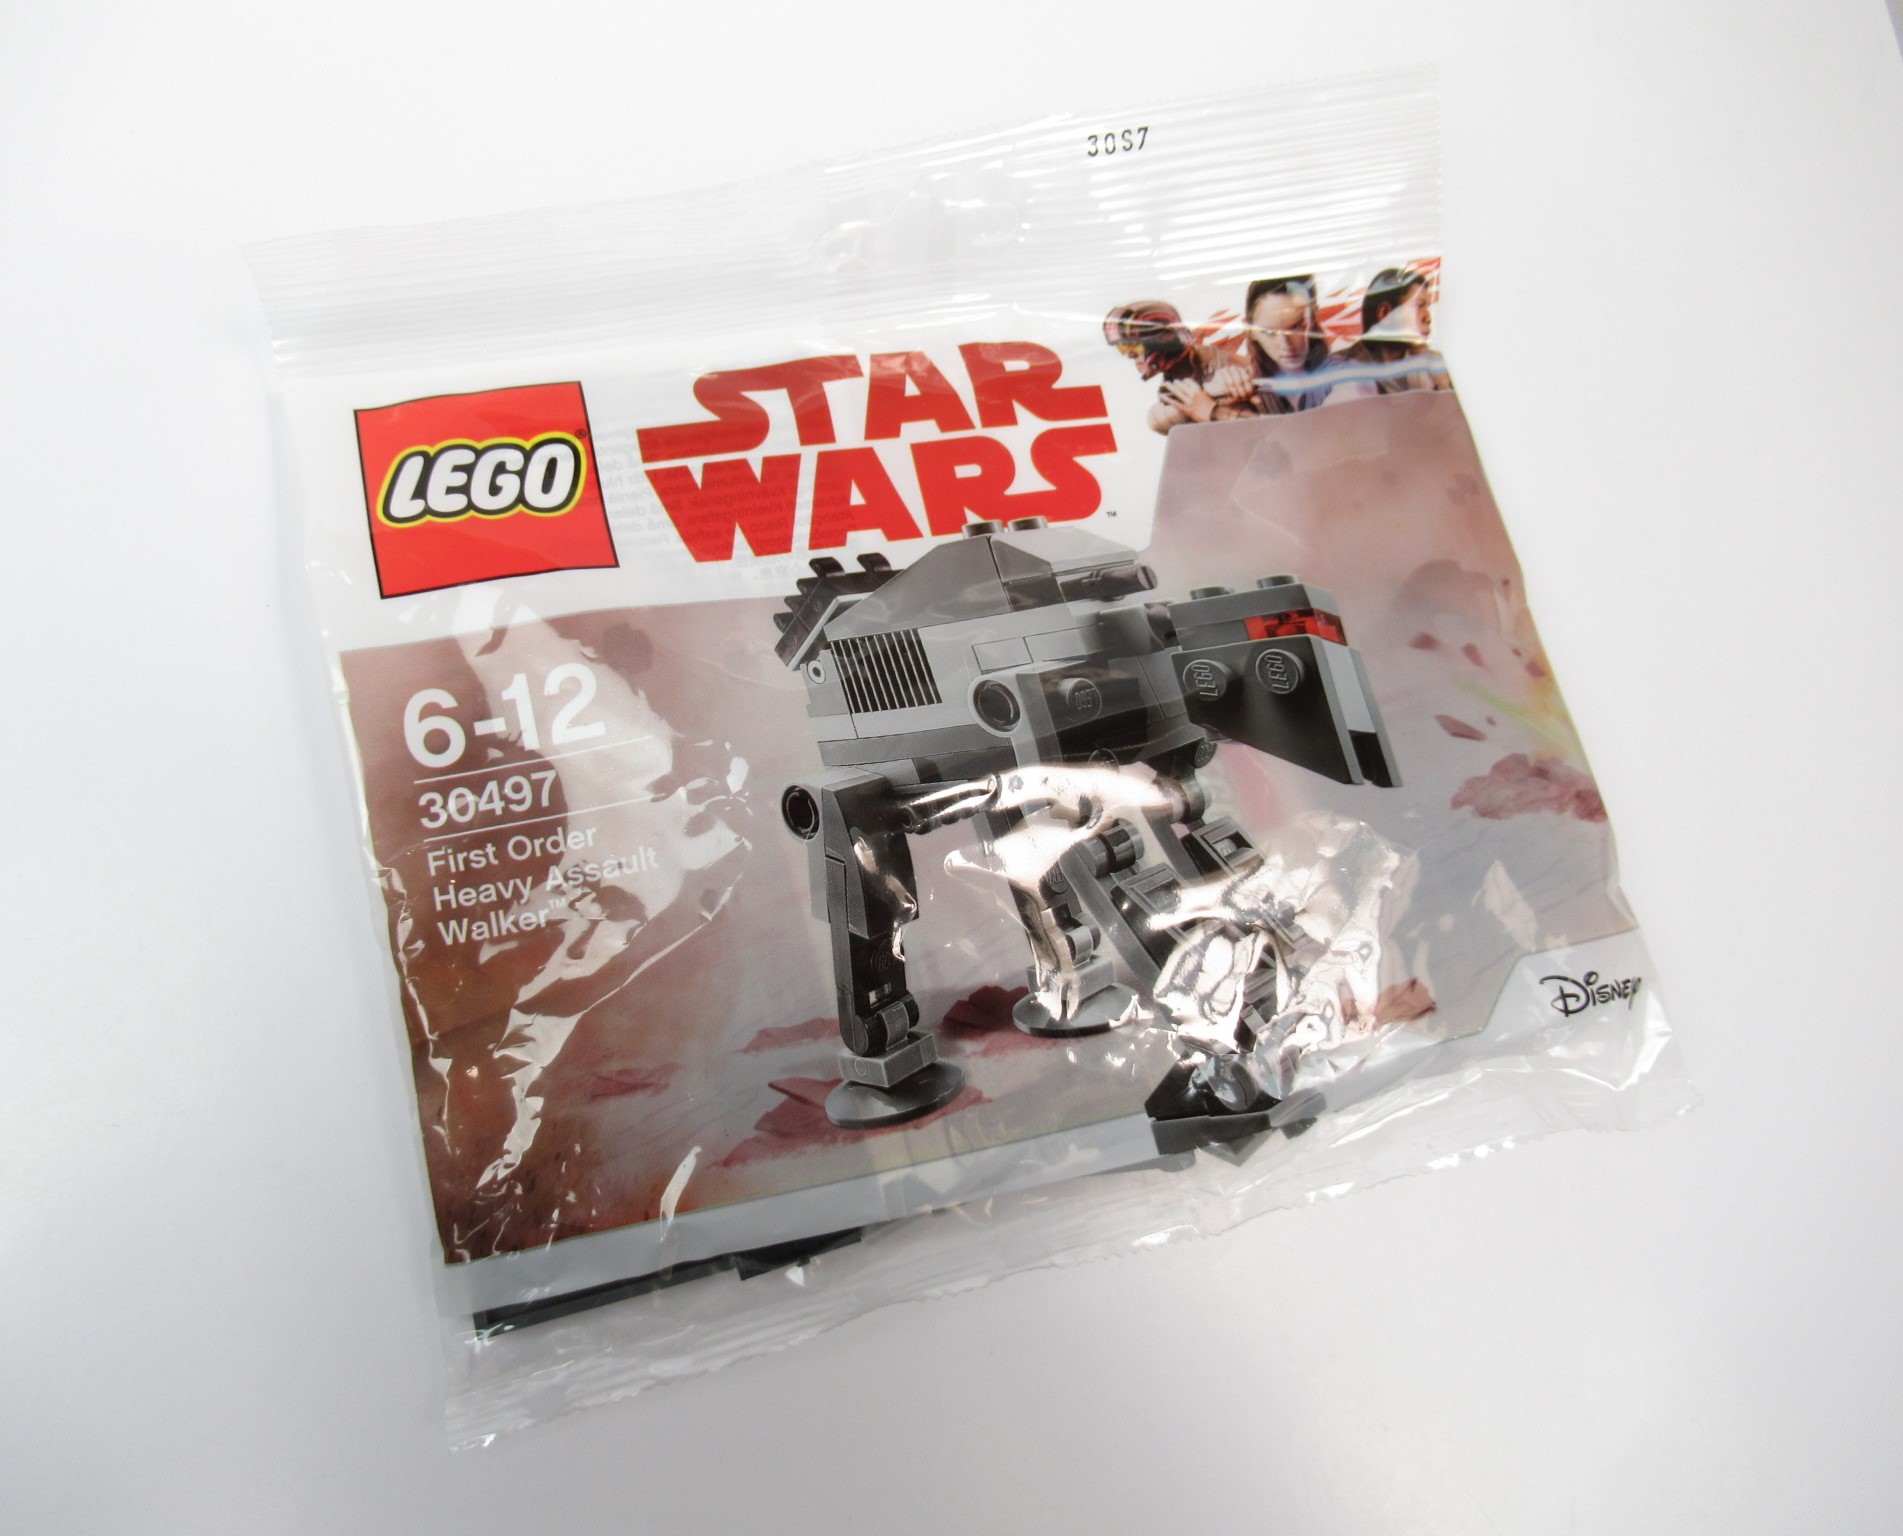 Resmi LEGO Star Wars 30497 First Order Heavy Assault Walker Polybag